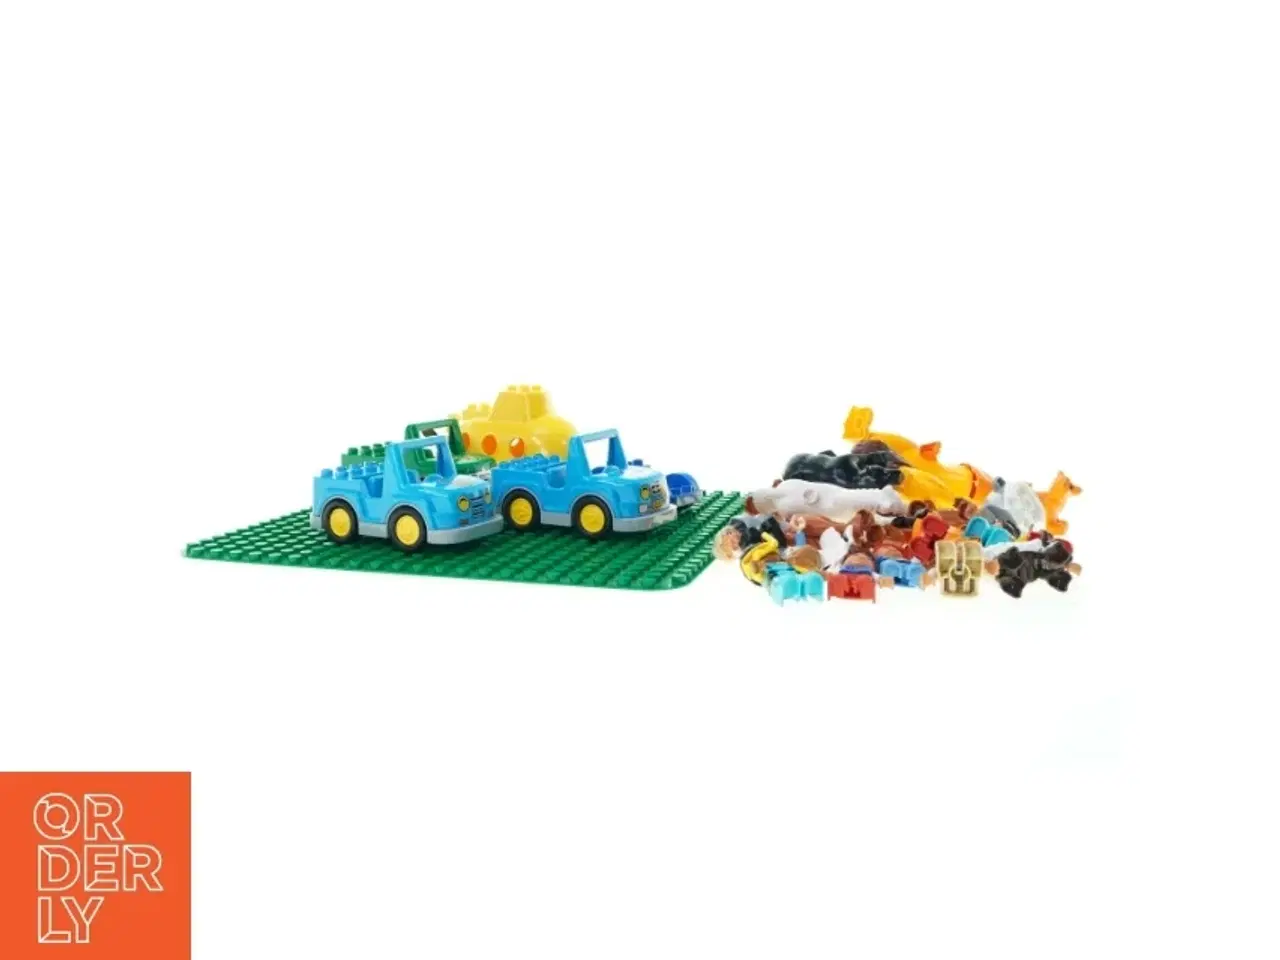 Billede 1 - Lego Duplo: Juressic Park, ubåd & Dykkere, Safari, Skov Ranger mm (str. Den store grønne plade er 38 x 38 cm)